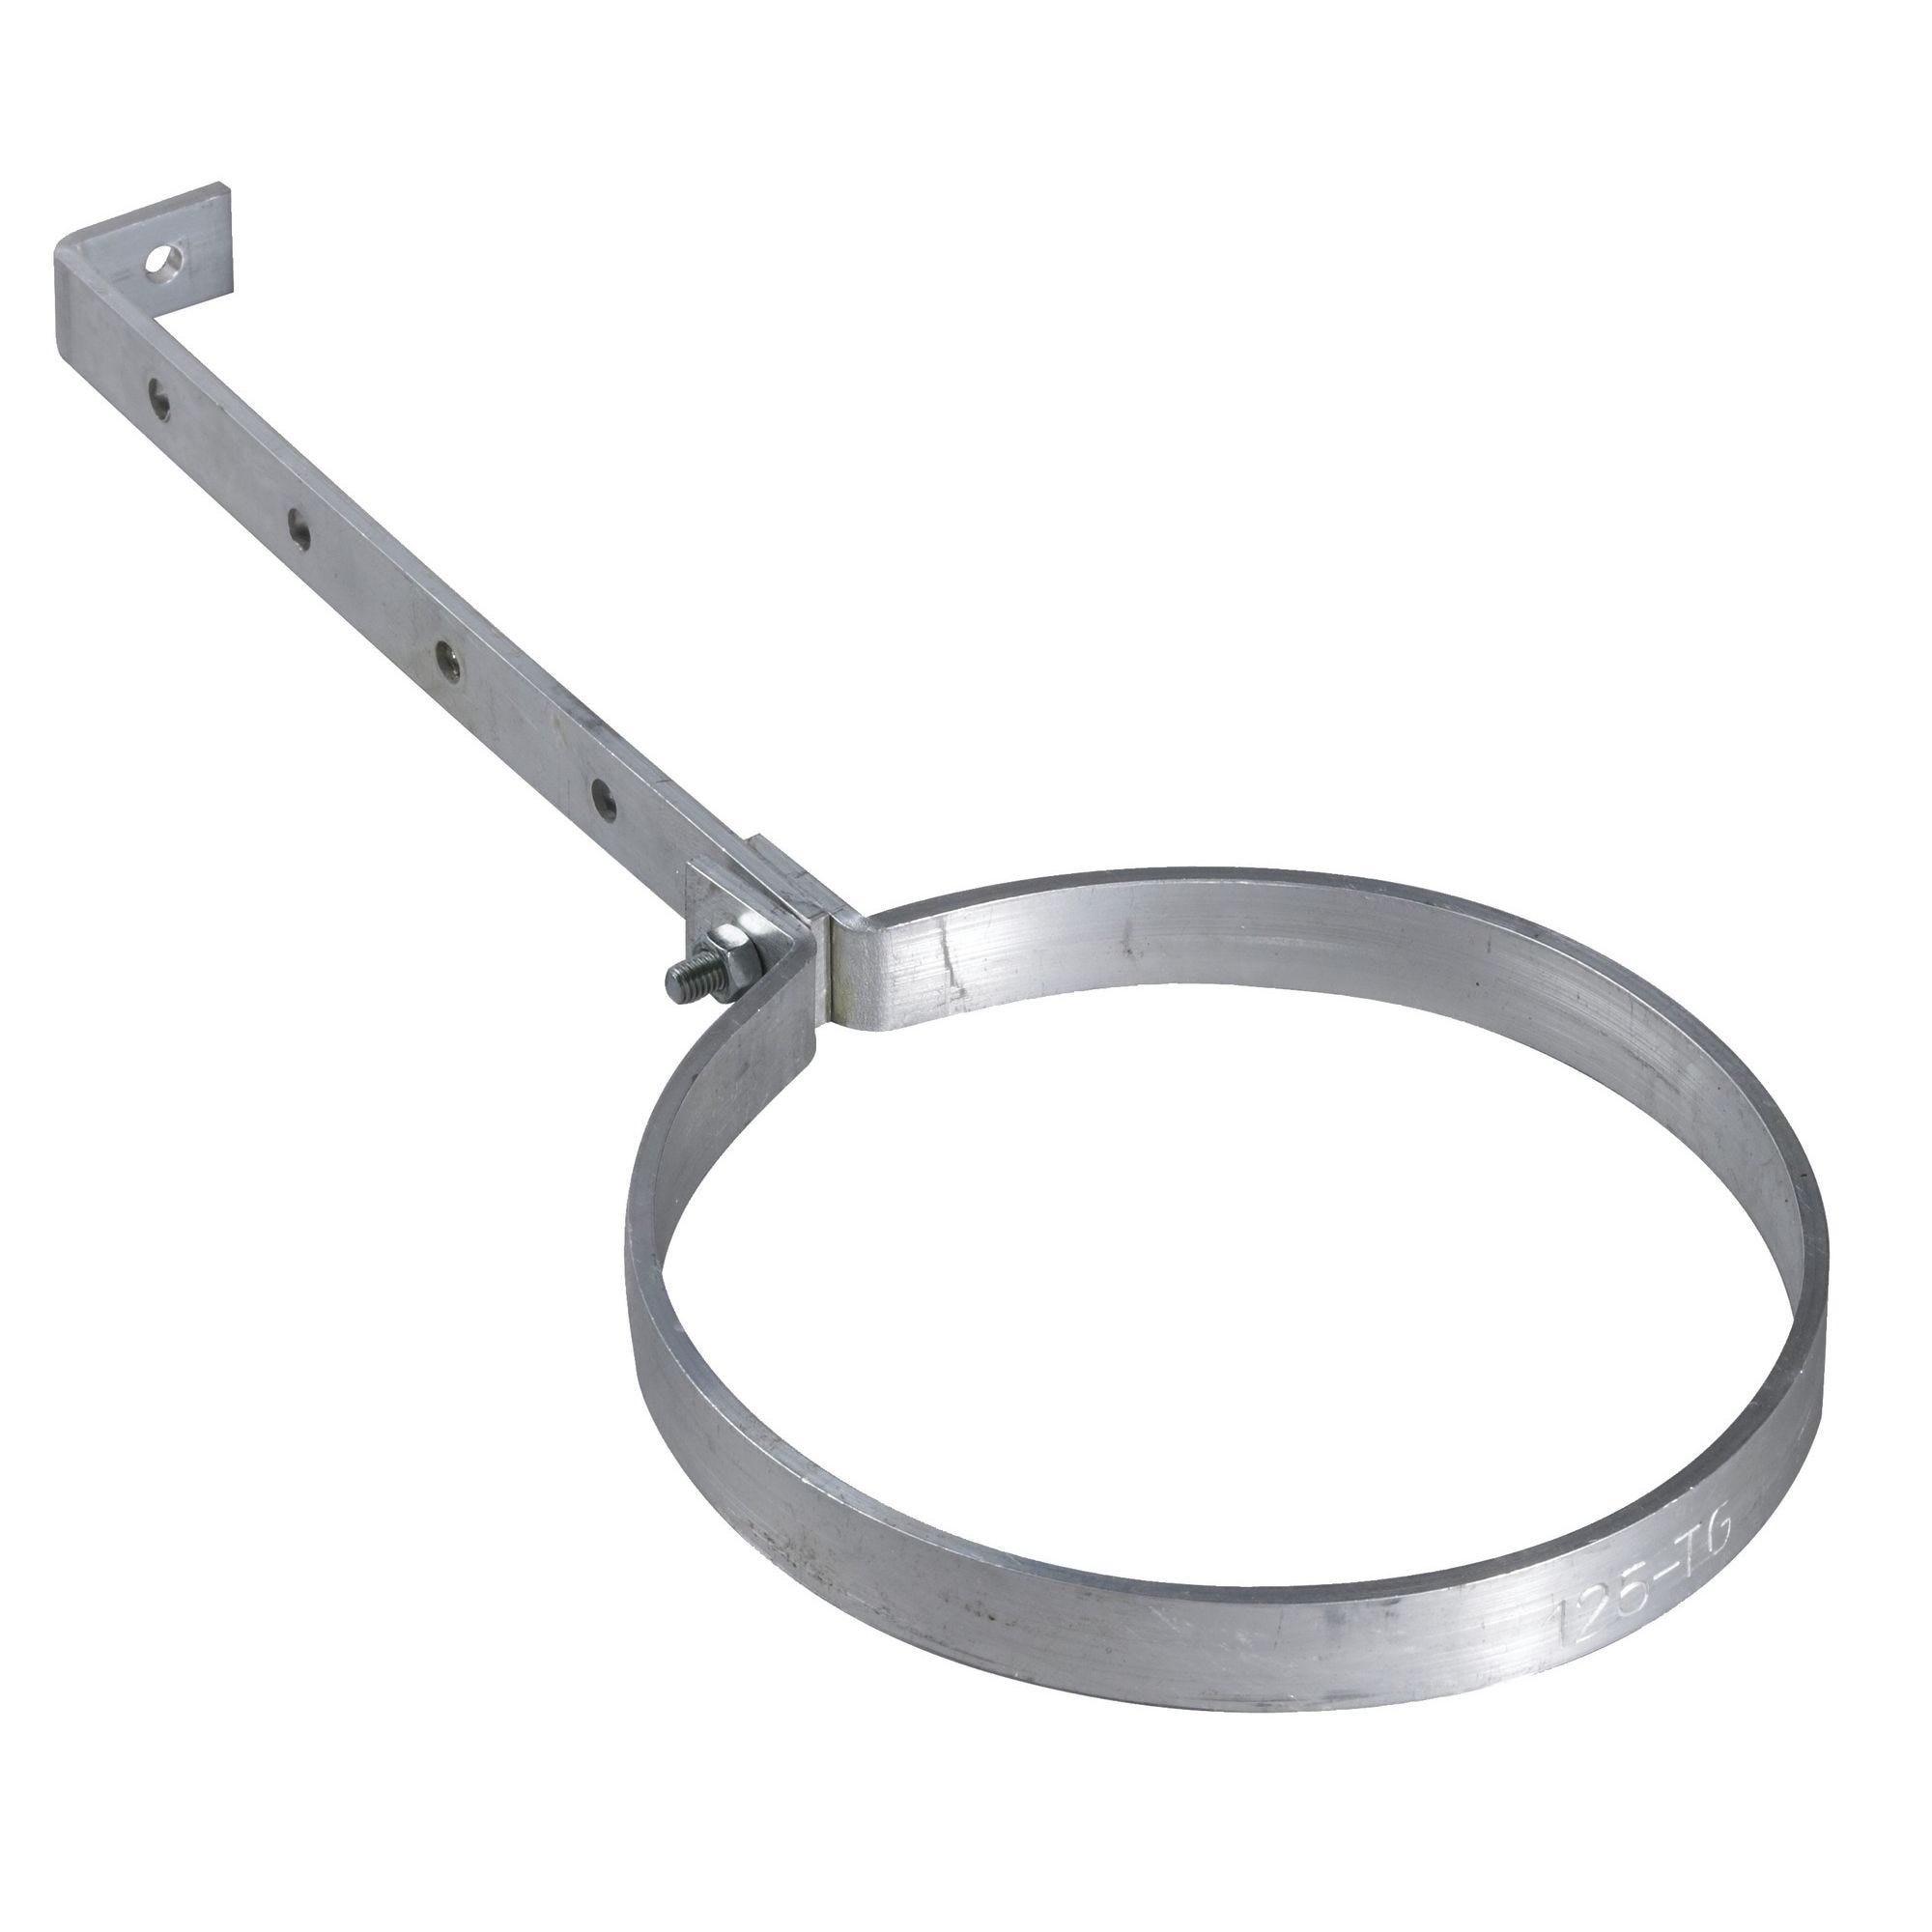 Collier de suspension en aluminium D153 - TOLERIE GENERALE - 153 0